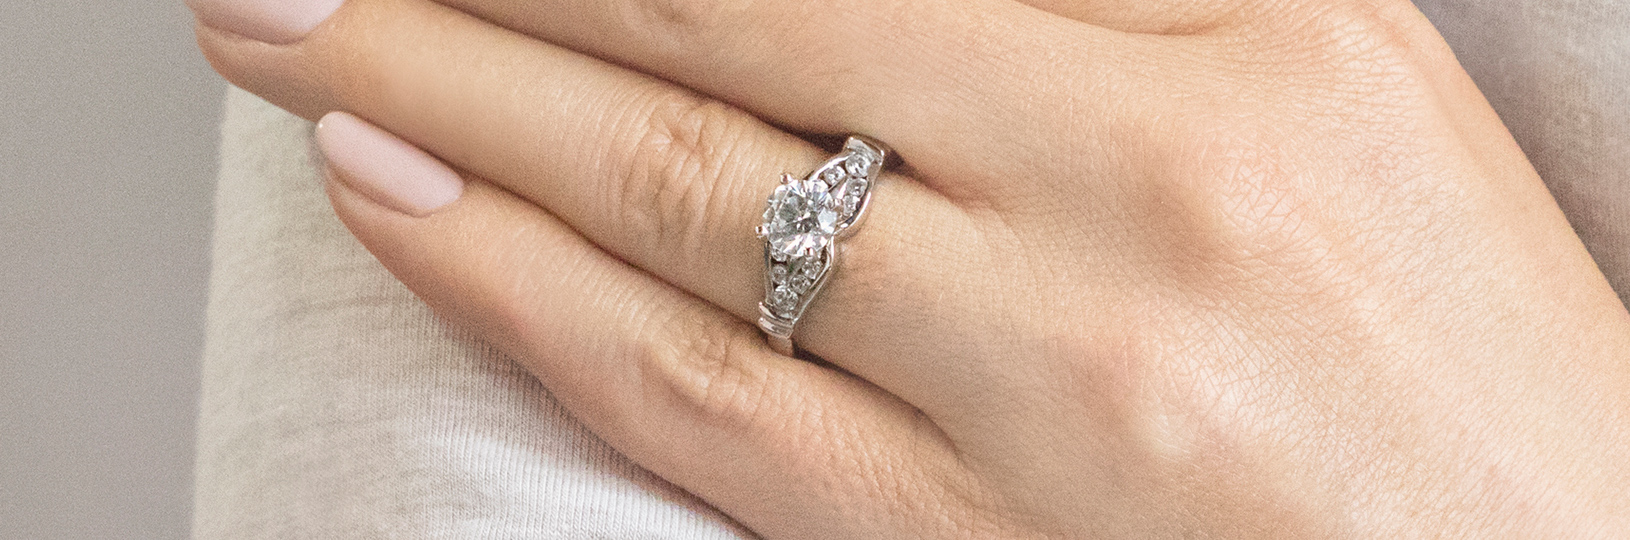 Simulated diamond engagement ring